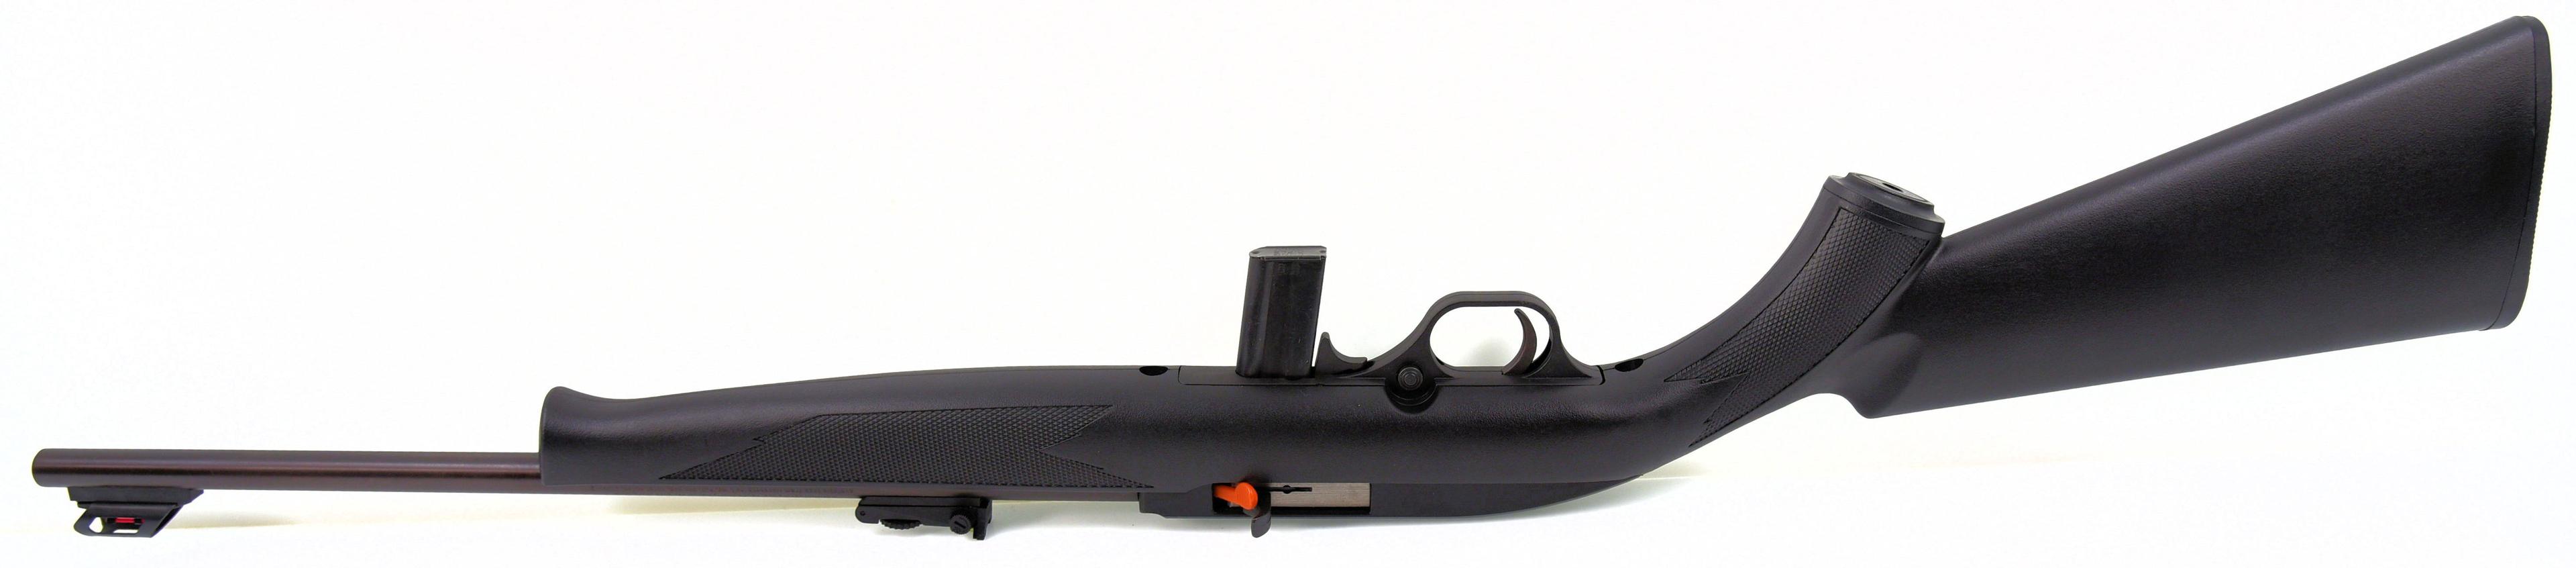 CBC/Imp by Mossberg International 702 Plinkster Semi Auto Rifle